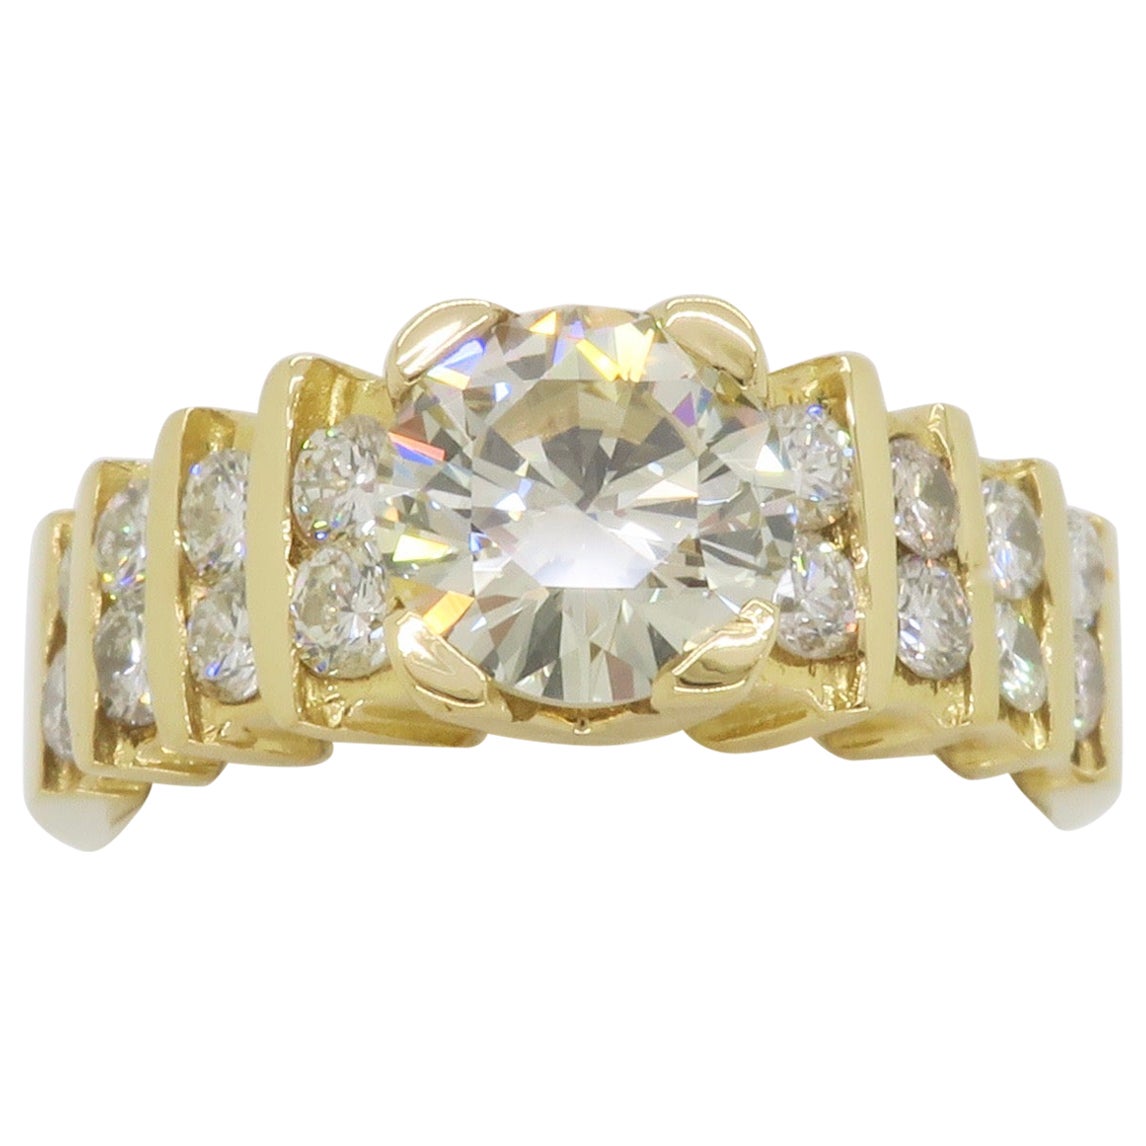 1.54ctw Diamond Encrusted Ring in 14k Yellow Gold